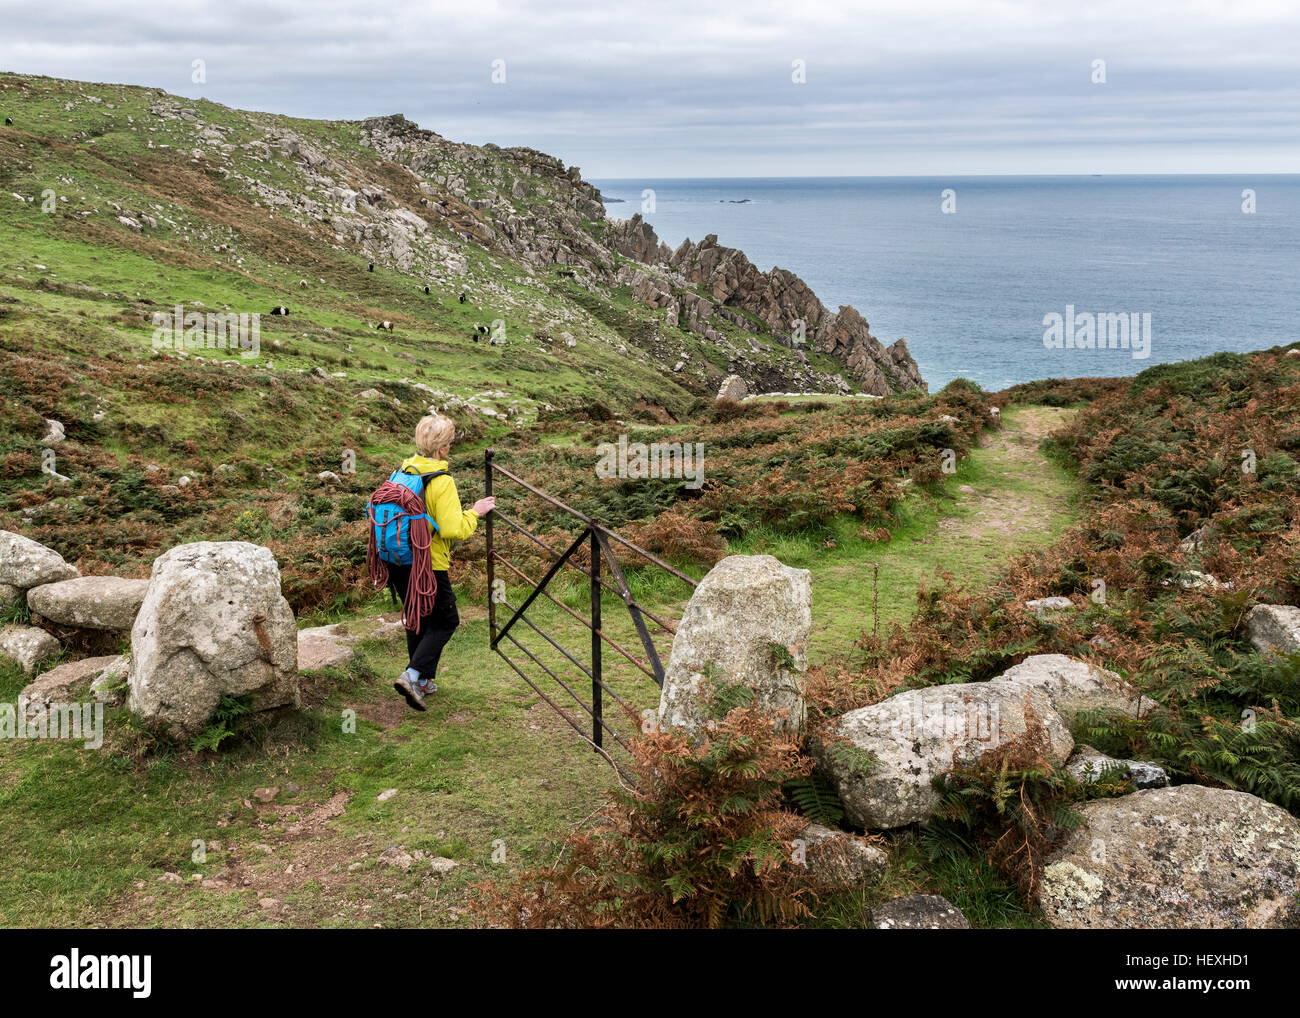 UK, Cornwall, woman at Commando Ridge climbing route Stock Photo